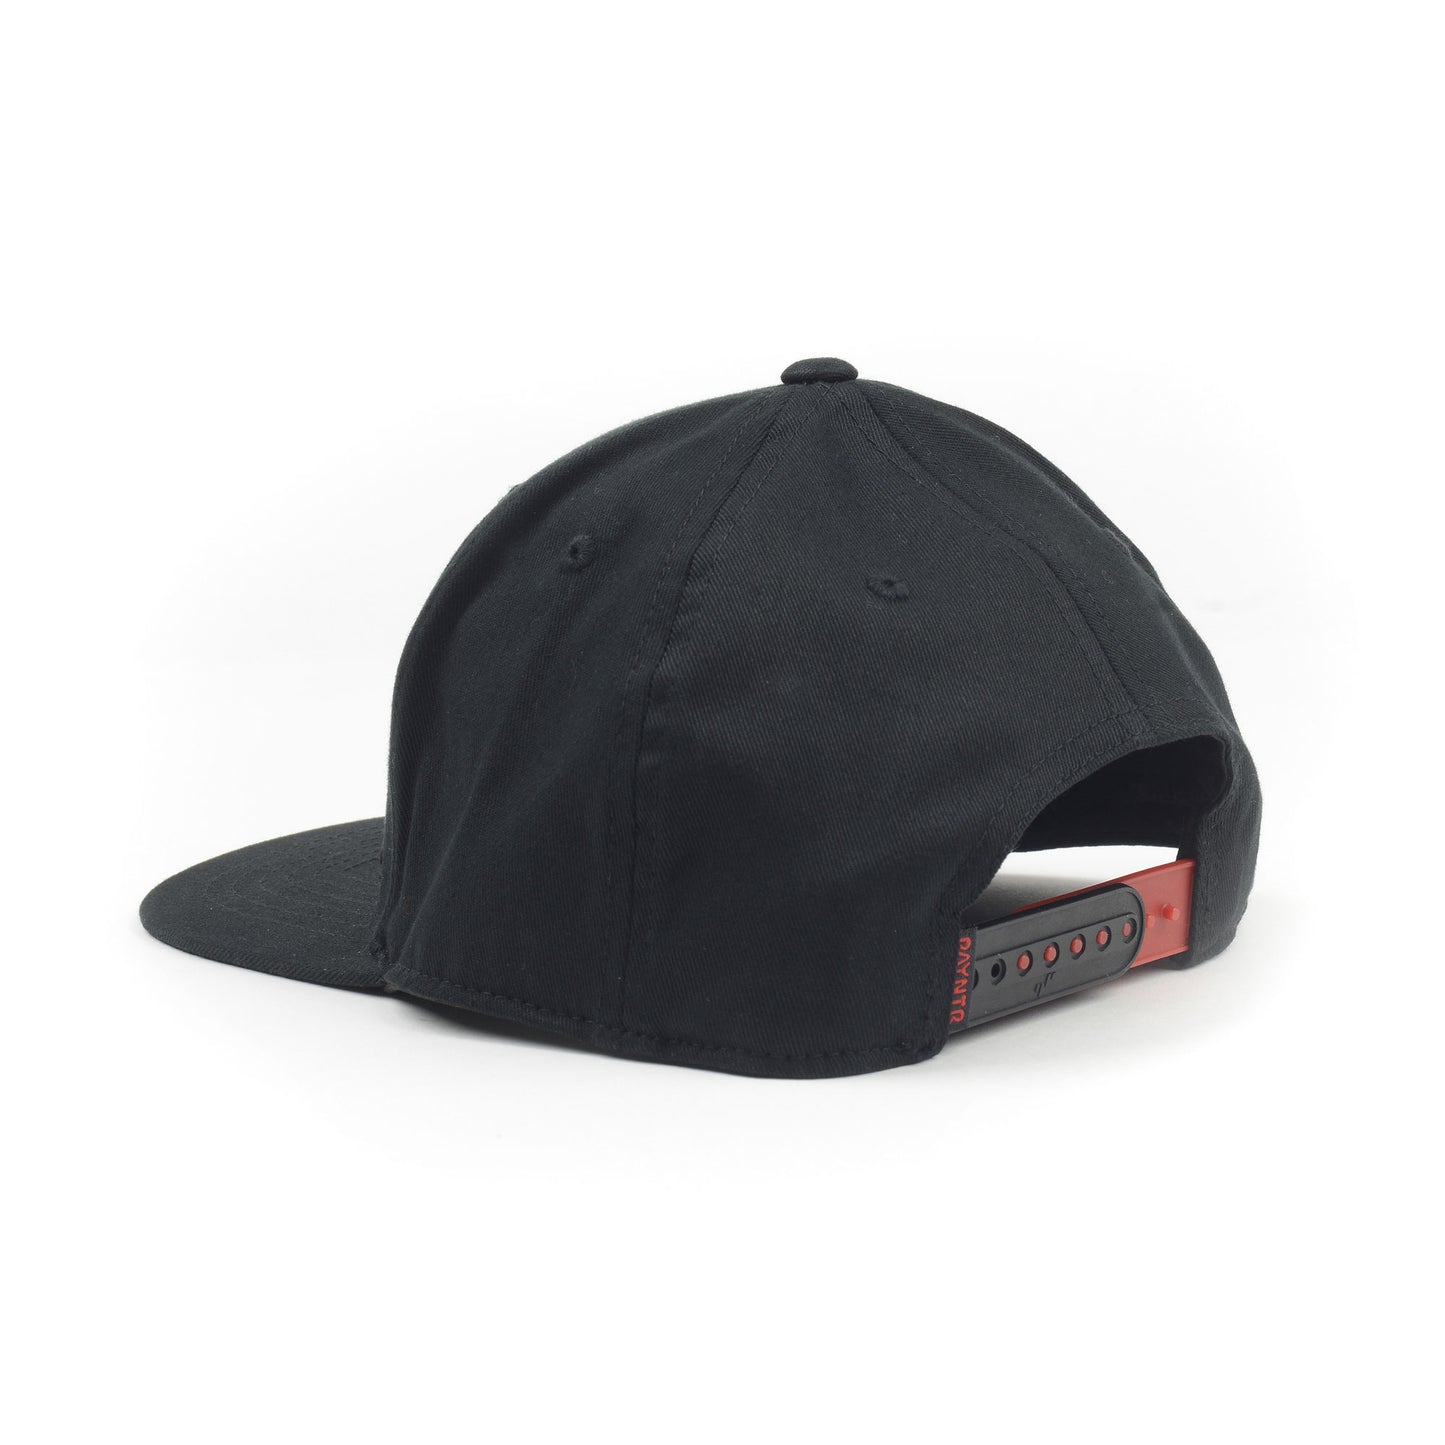 PAYNTR Brand X Cap (Black) - Back